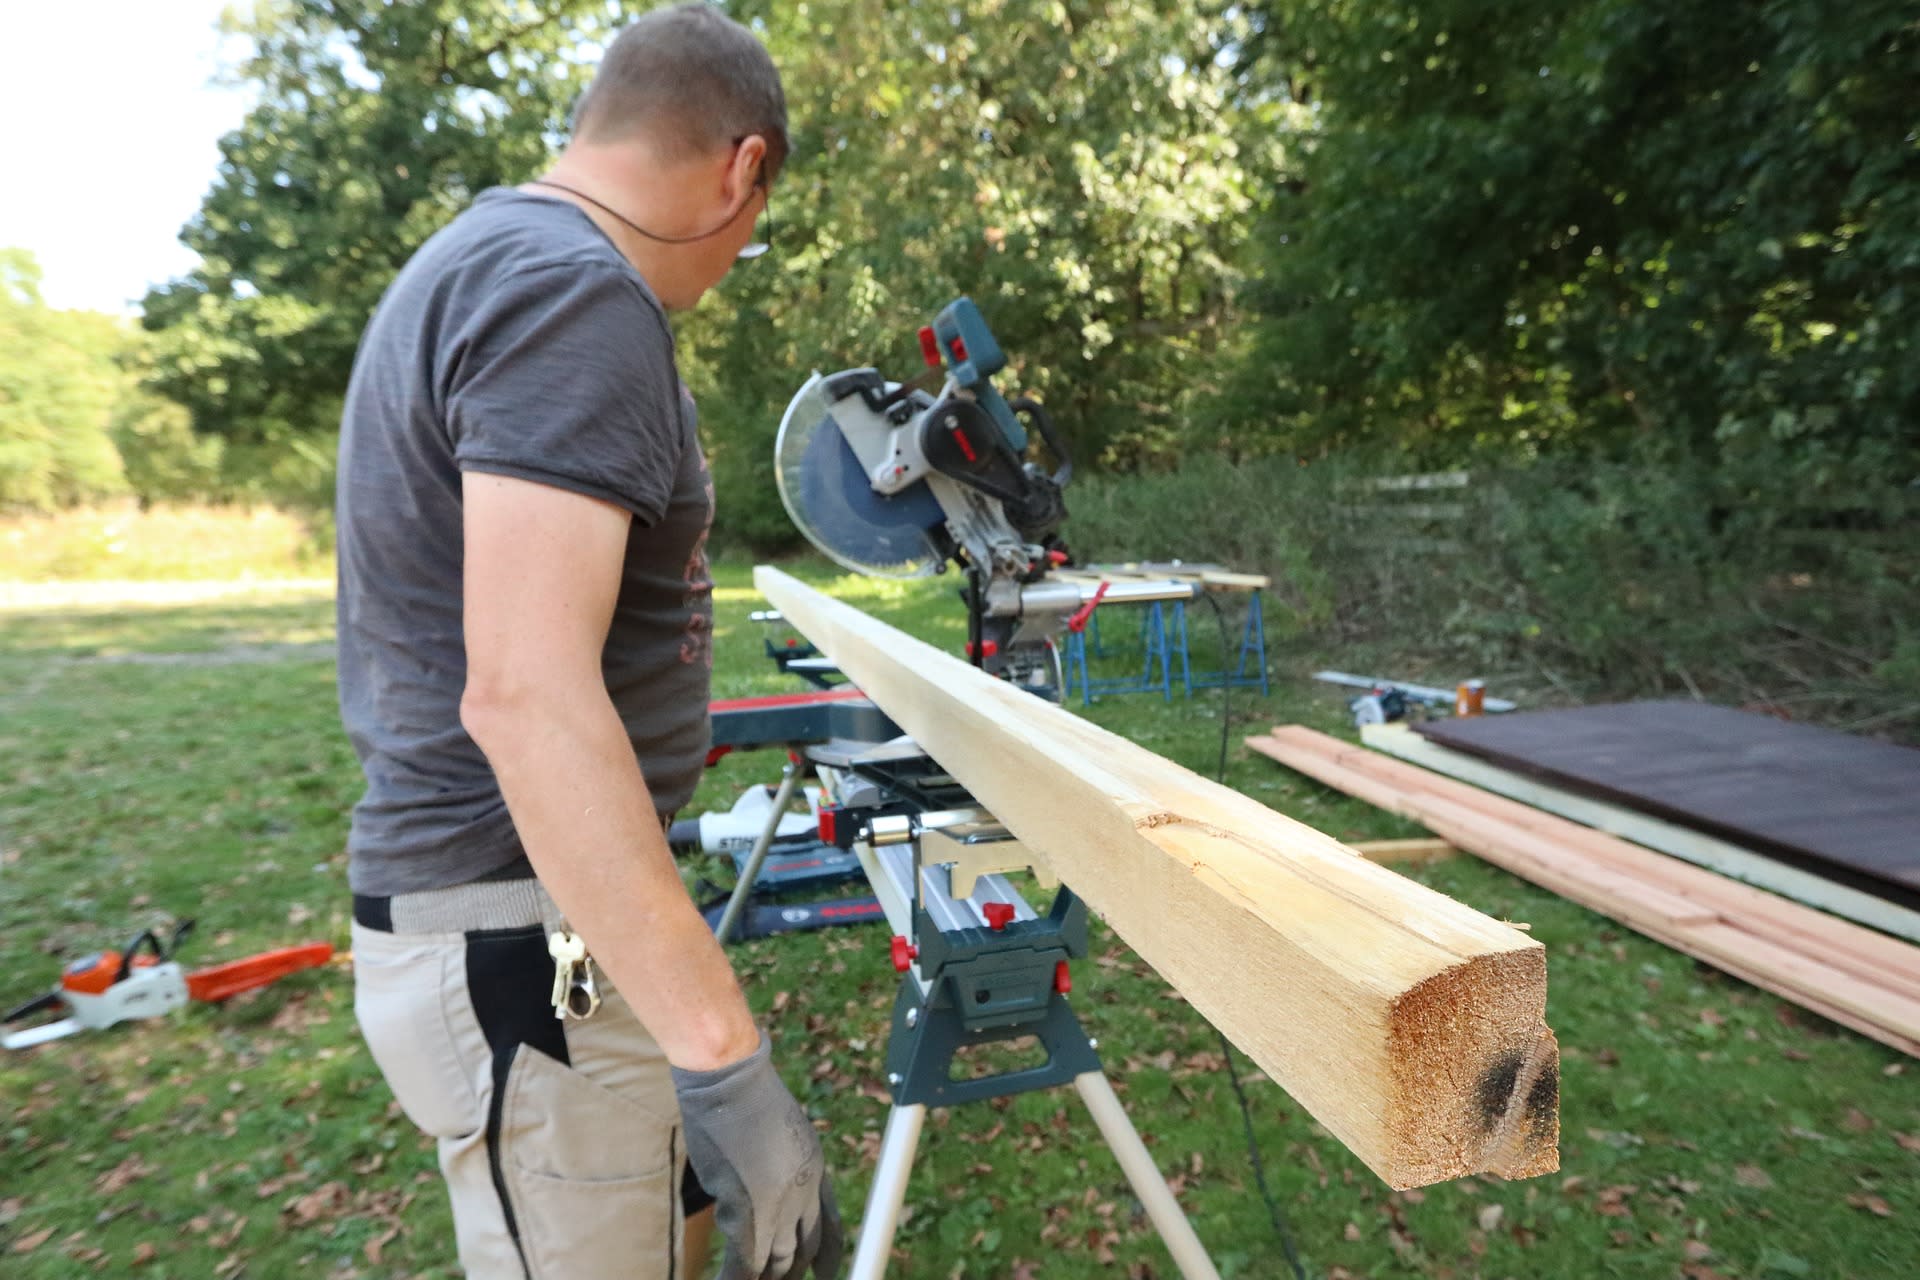 carpenter preparing to cut lumber - home renovation project niagara